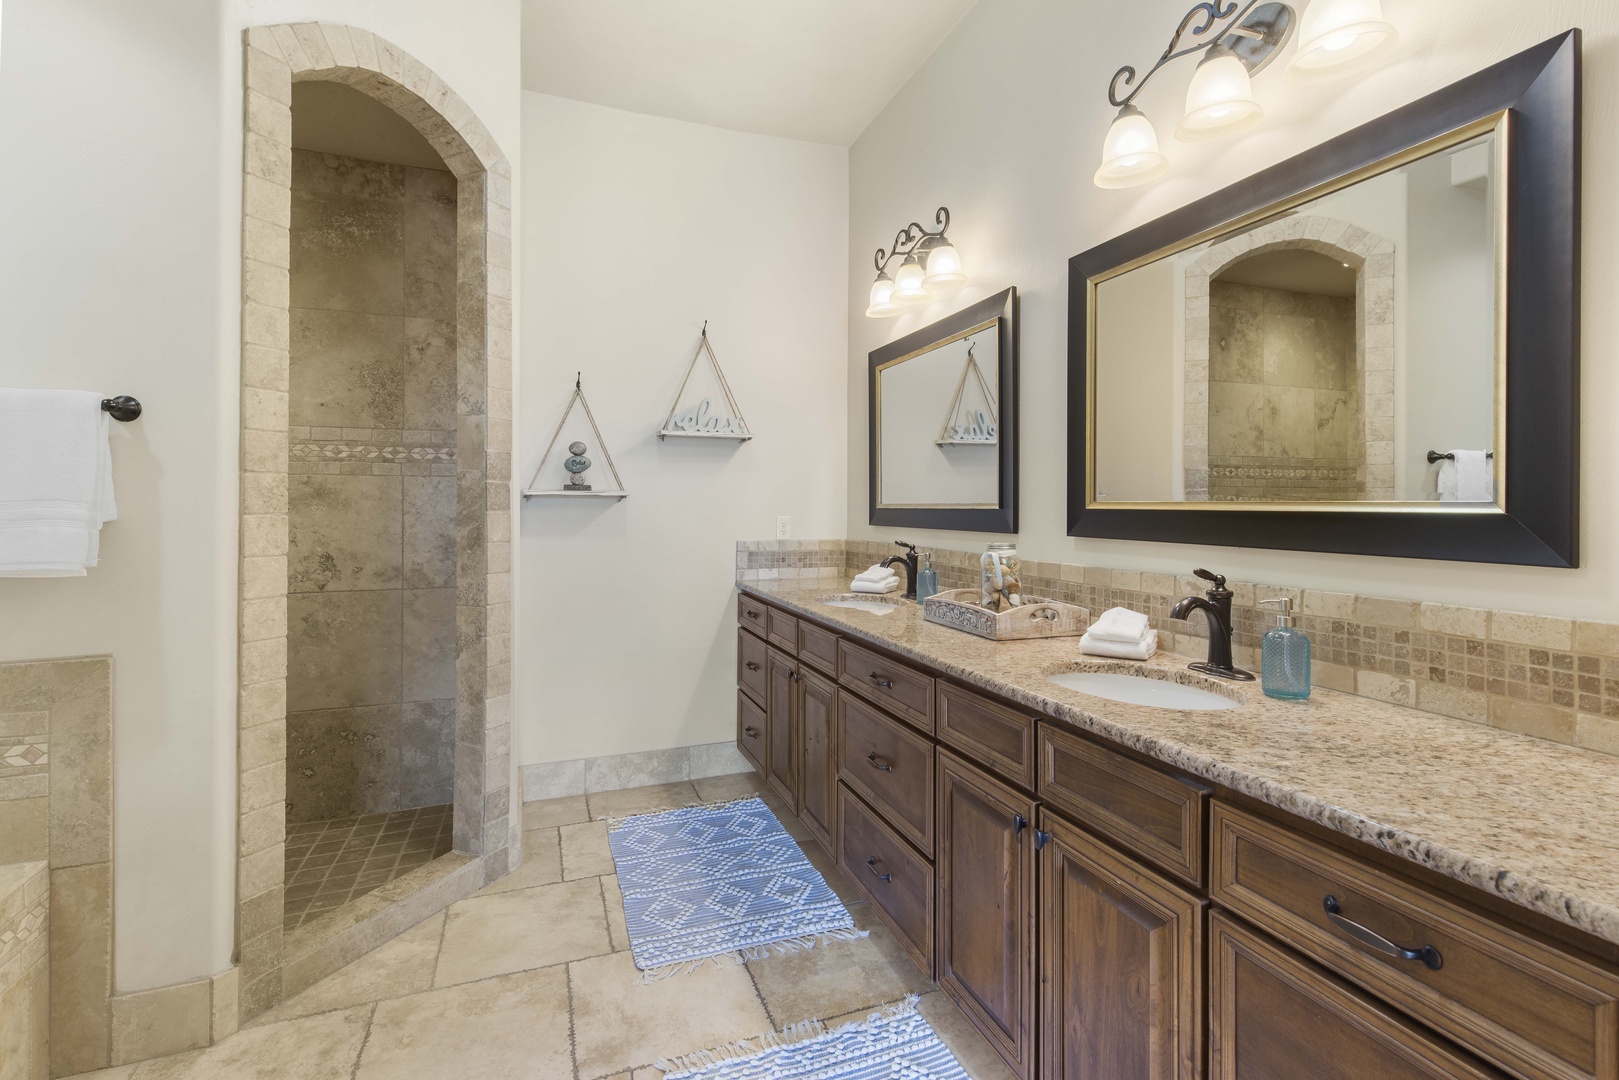 The king en suite bath boasts a double vanity, shower, & Jacuzzi soaking tub